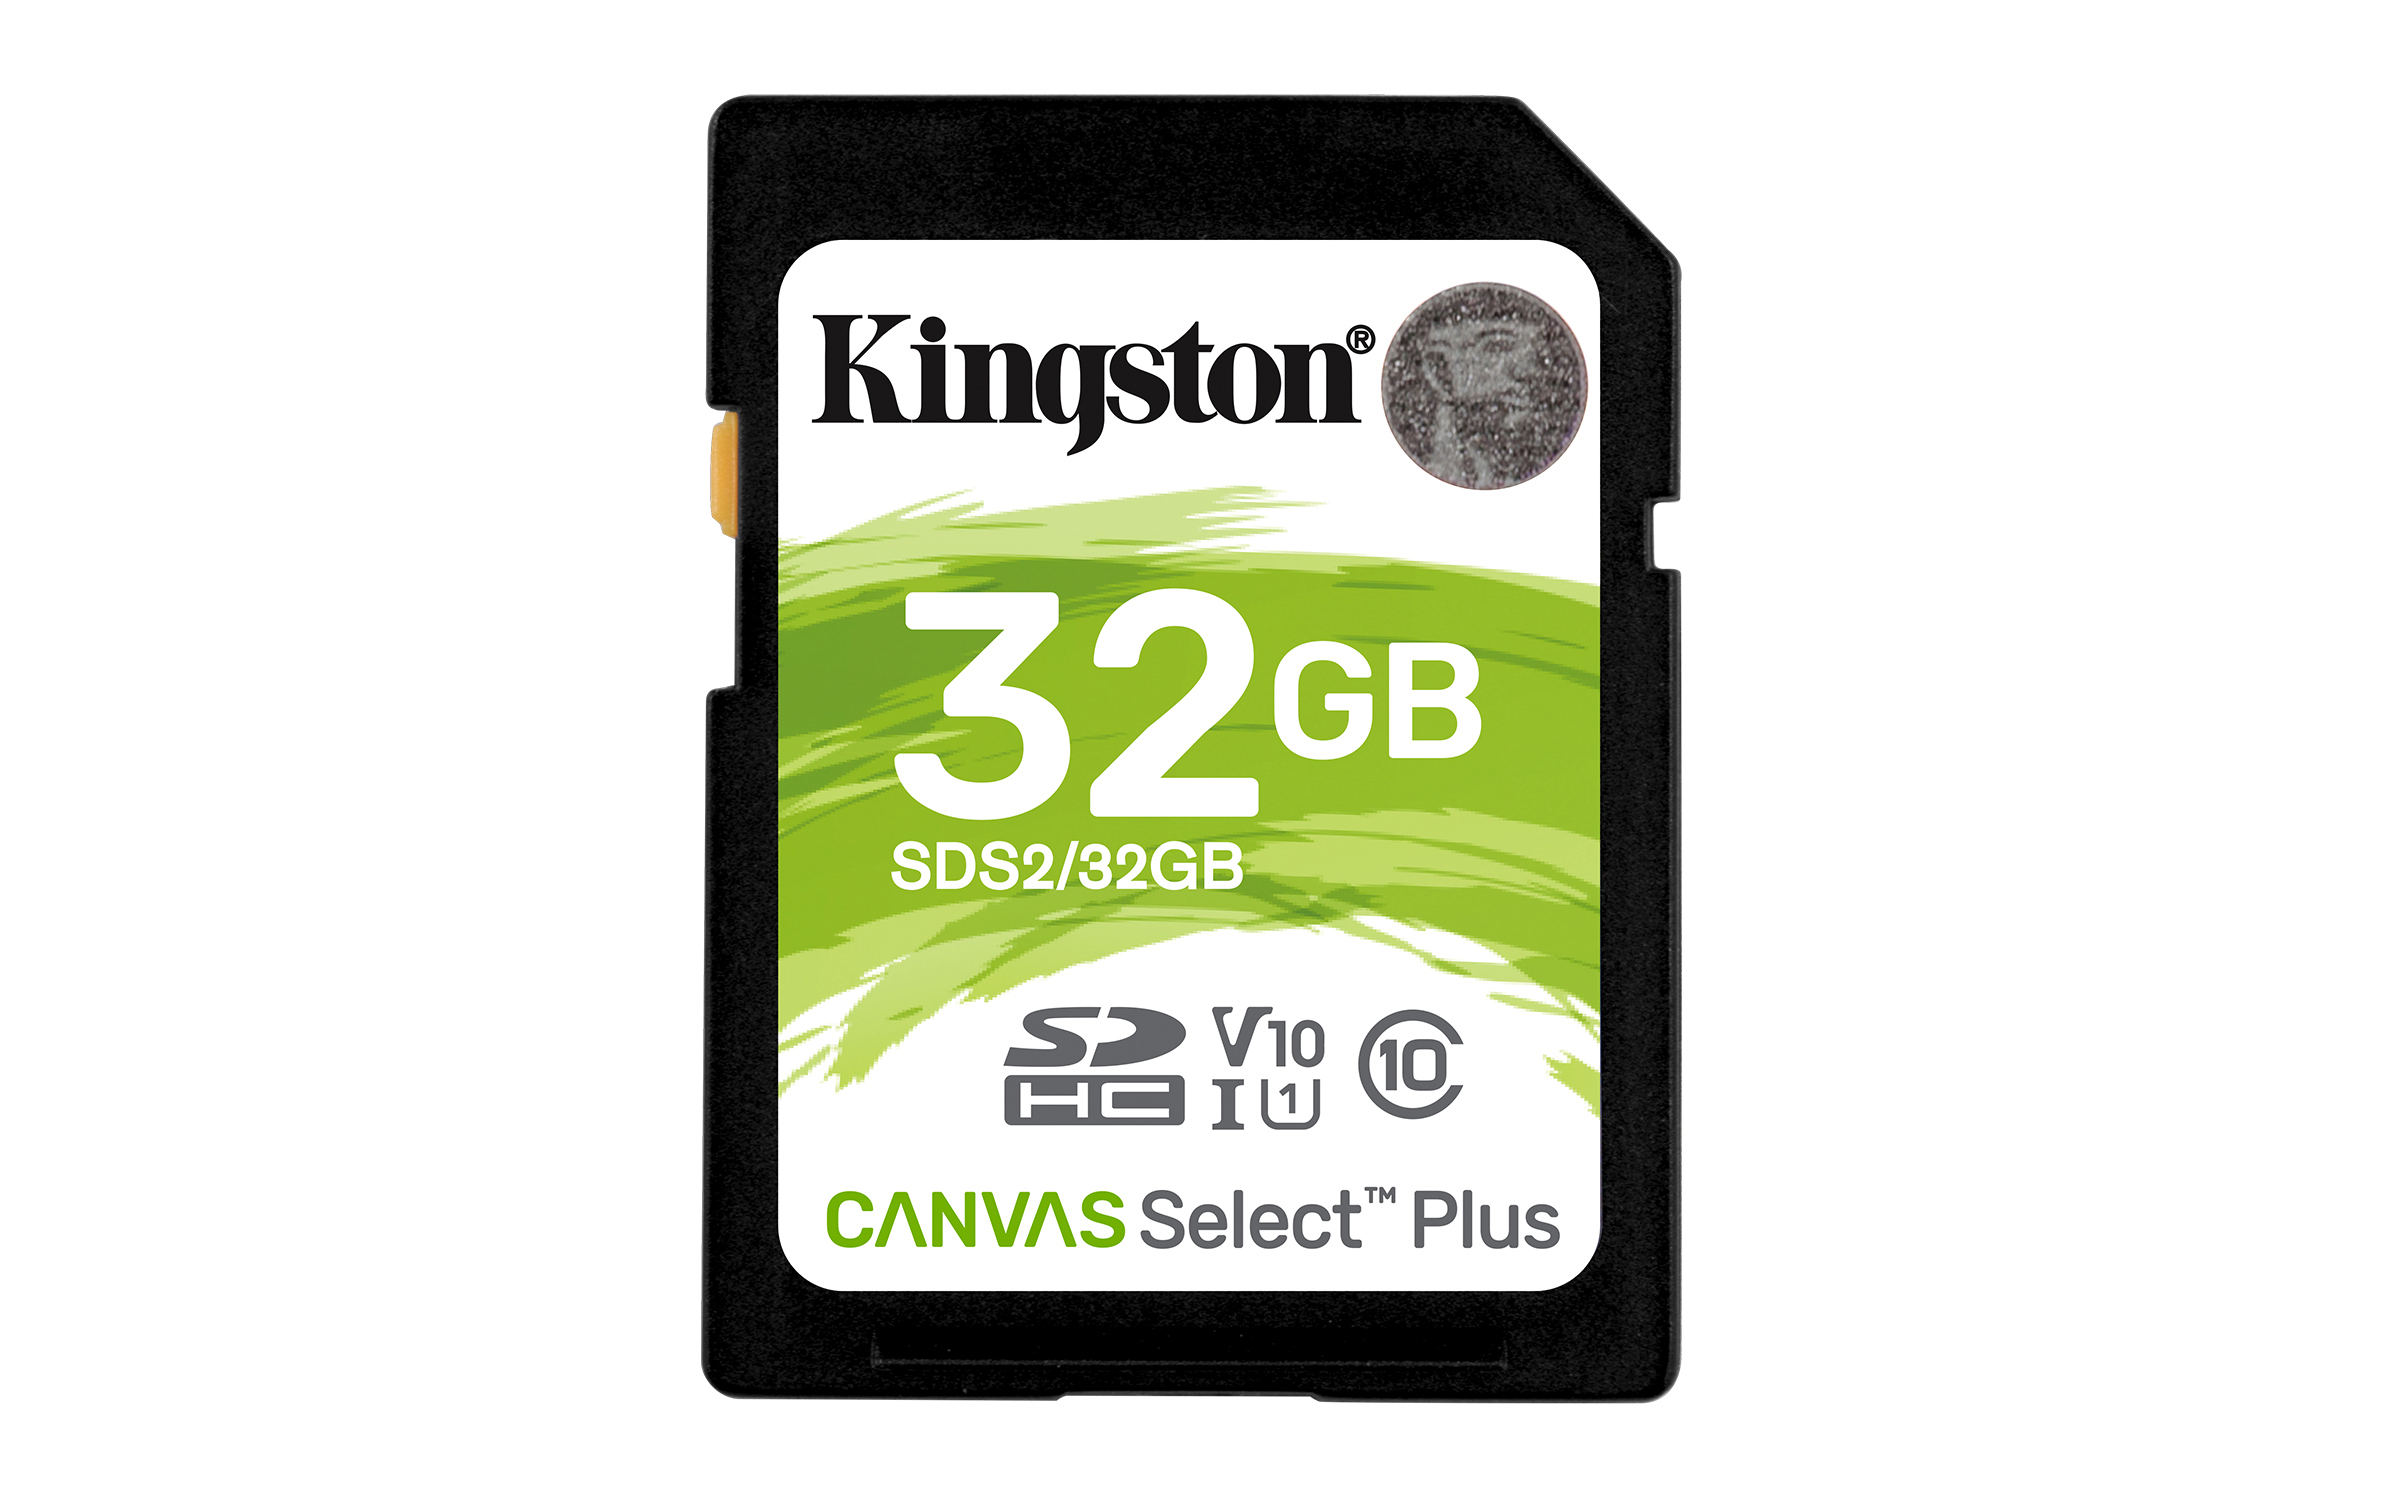 SD KINGSTON CANVAS PLUS 32GB HC 10